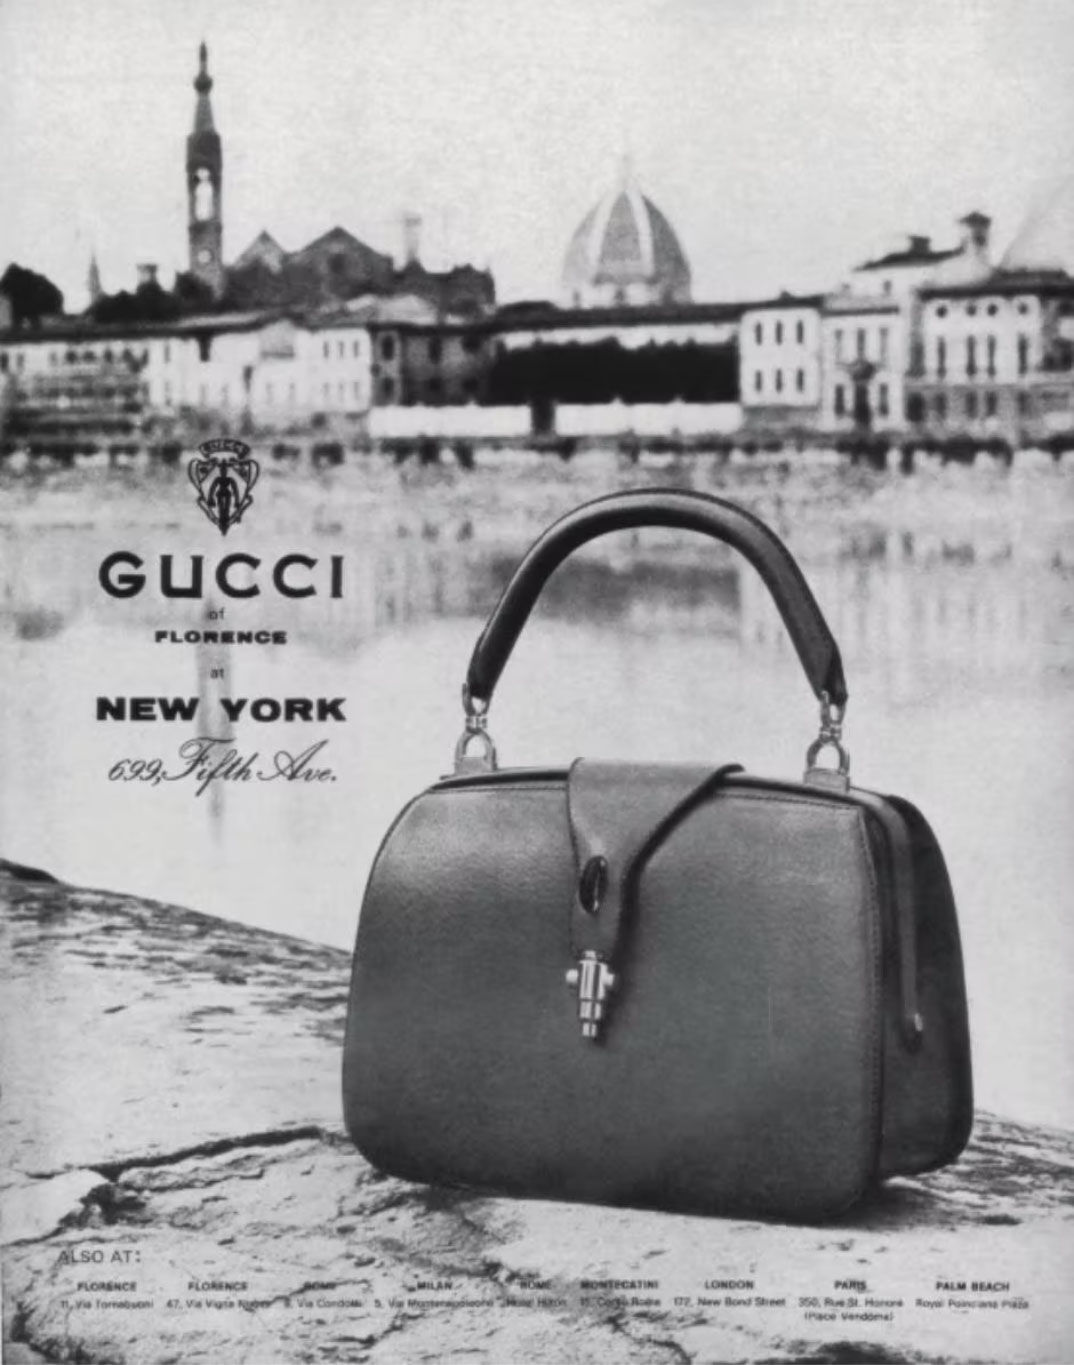 lich-su-gucci-cua-hang-new-york-thap-nien-1950.jpg